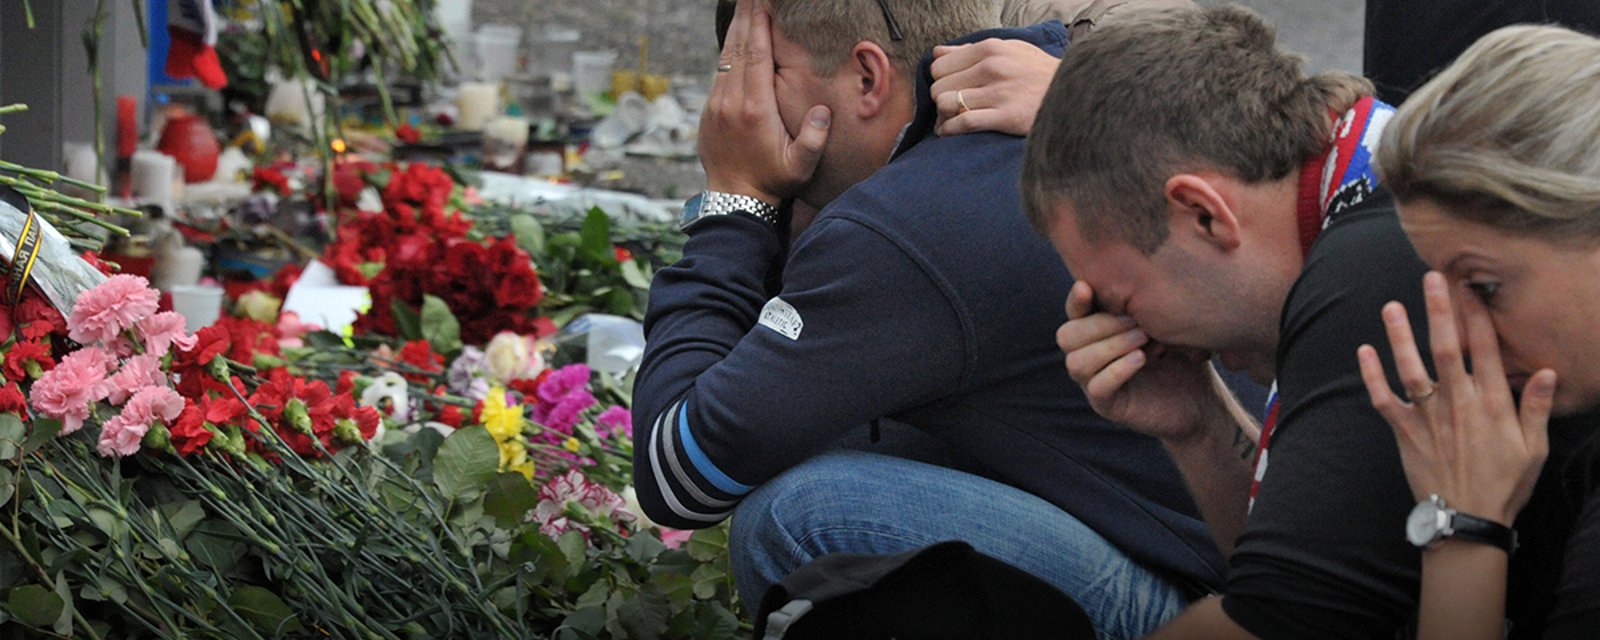 On this Day: 43 die in tragic Yaroslavl plane crash